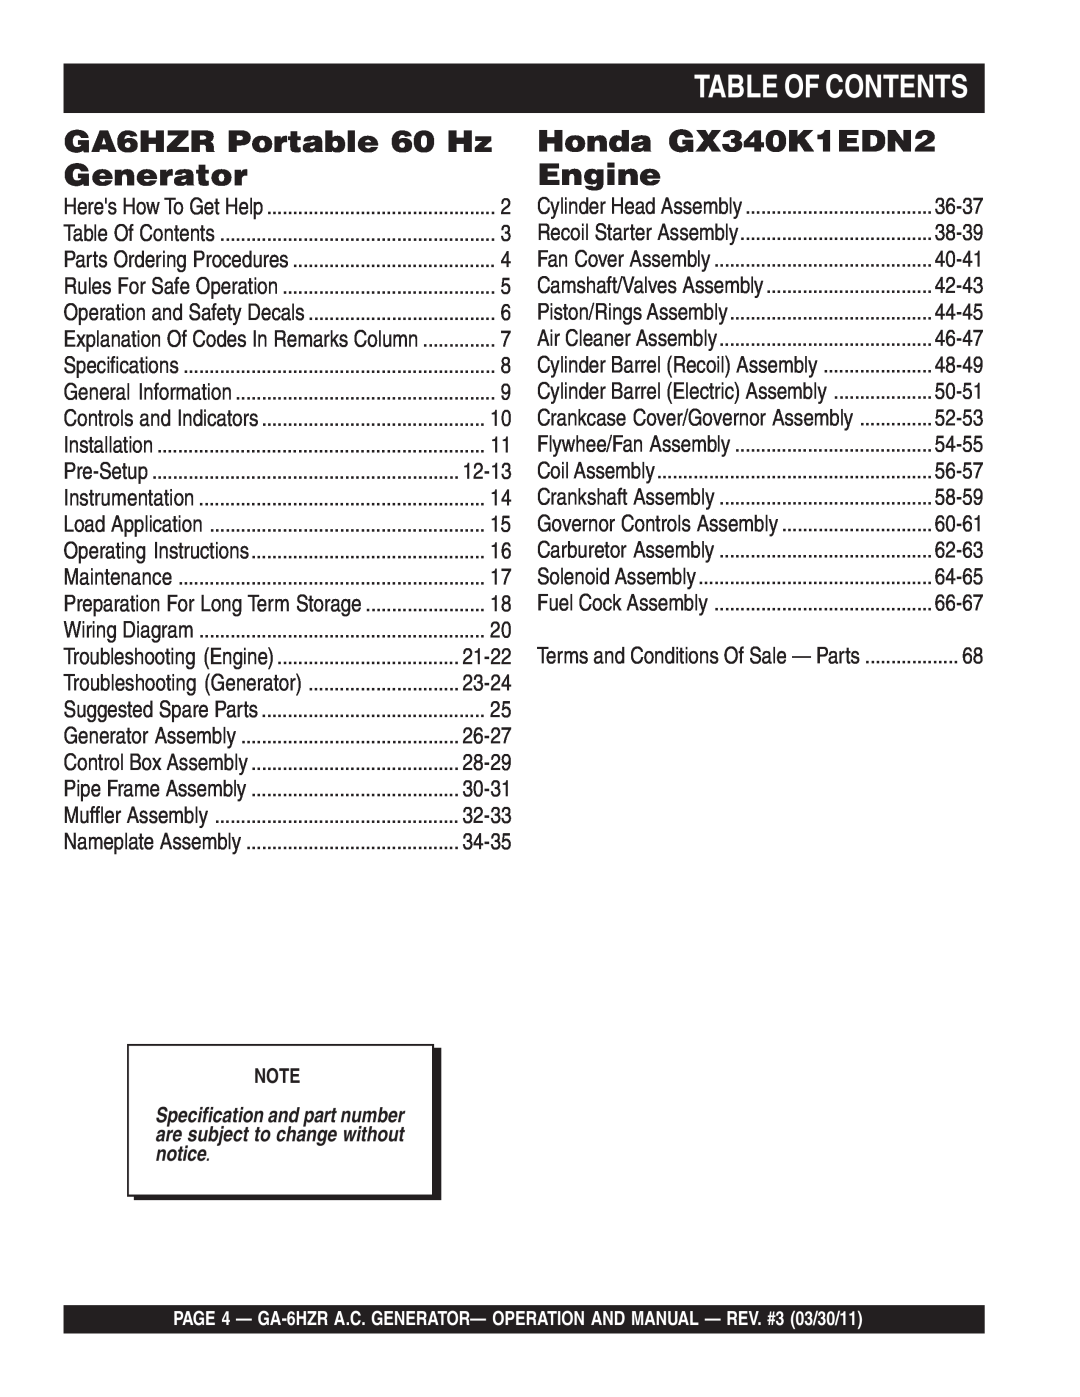 Multiquip manual Table Of Contents, GA6HZR Portable 60 Hz, Honda GX340K1EDN2, Generator, Engine 